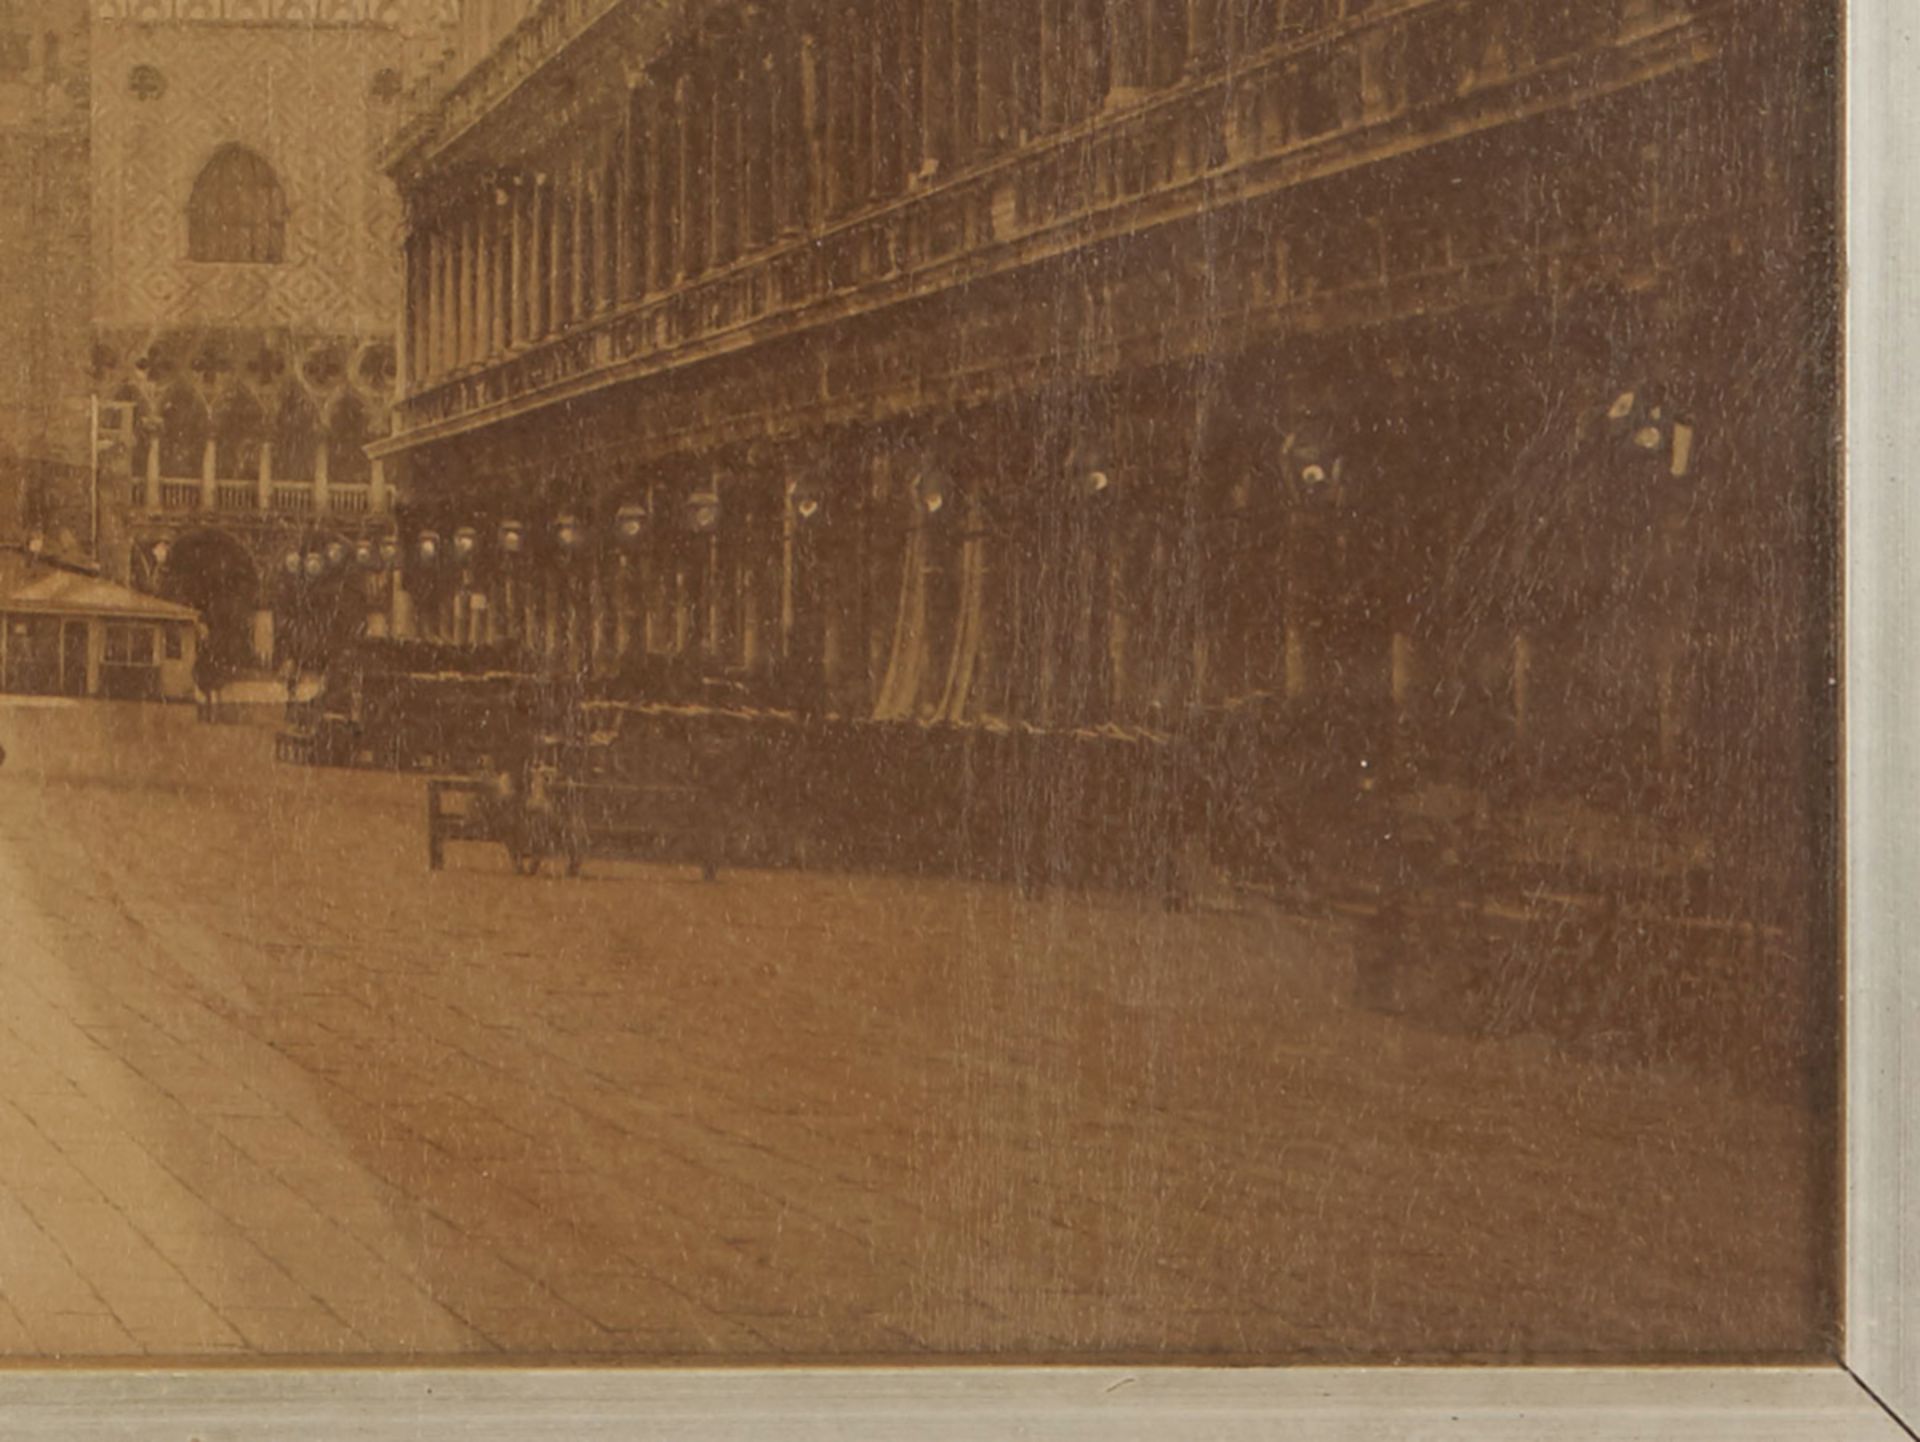 ANTIQUE PHOTOGRAPH, ST MARK'S BASILICA VENICE, 19TH CENTURY - Image 4 of 6